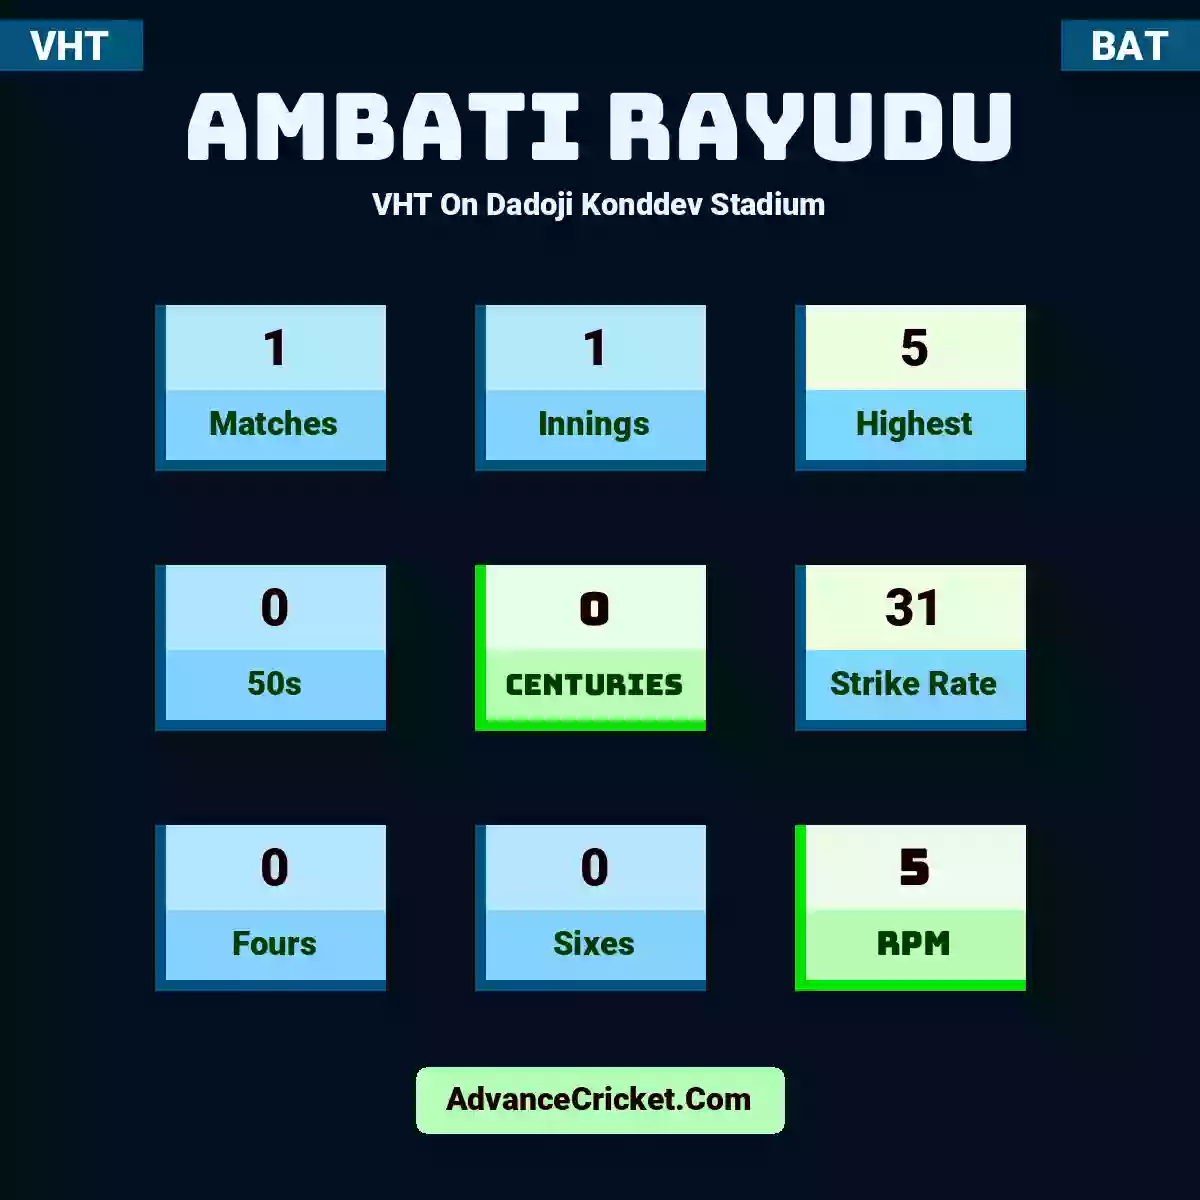 Ambati Rayudu VHT  On Dadoji Konddev Stadium, Ambati Rayudu played 1 matches, scored 5 runs as highest, 0 half-centuries, and 0 centuries, with a strike rate of 31. A.Rayudu hit 0 fours and 0 sixes, with an RPM of 5.